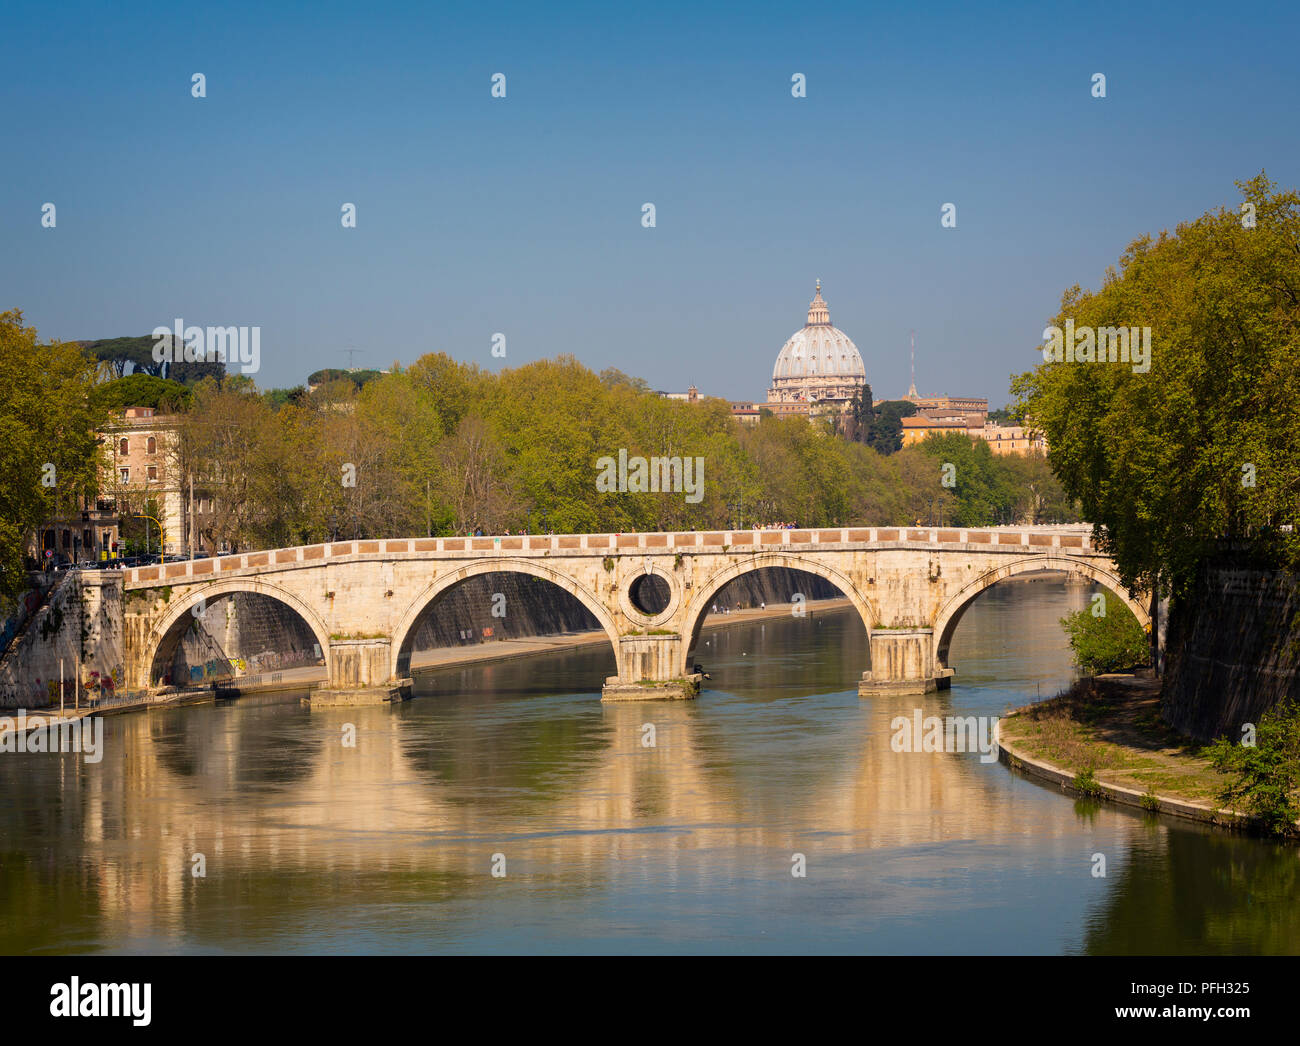 Roma, Italia. Sisto Bridge (Ponte Sisto) attraversando il fiume Tevere. Cupola di San Pietro sullo sfondo. Foto Stock